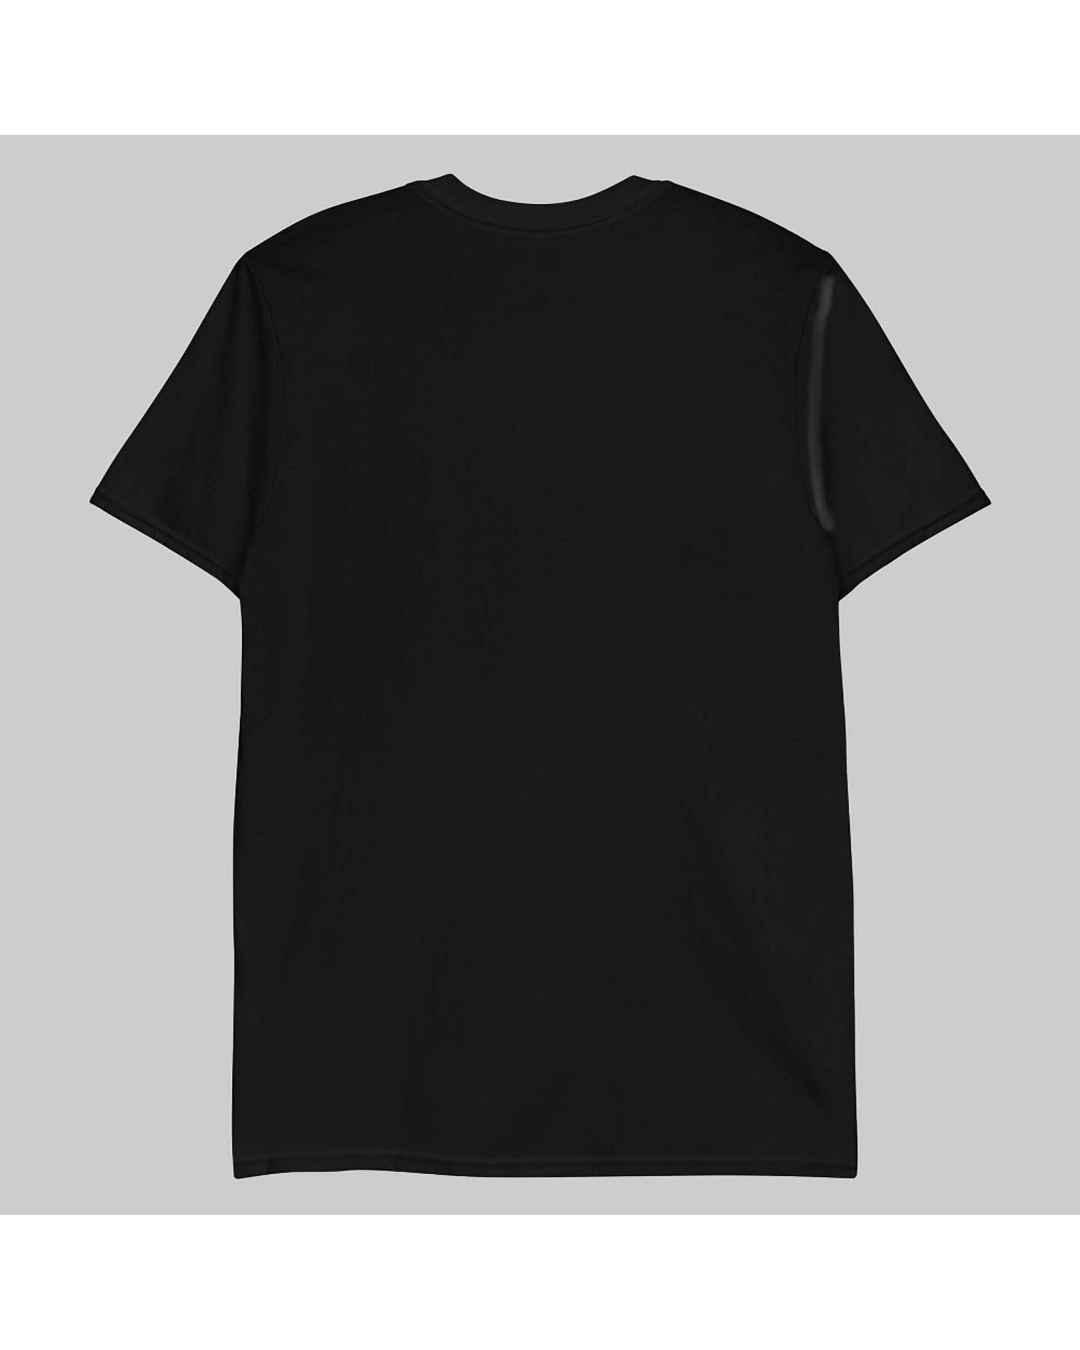 Shop Men's Black Skrillex Graphic Printed T-shirt